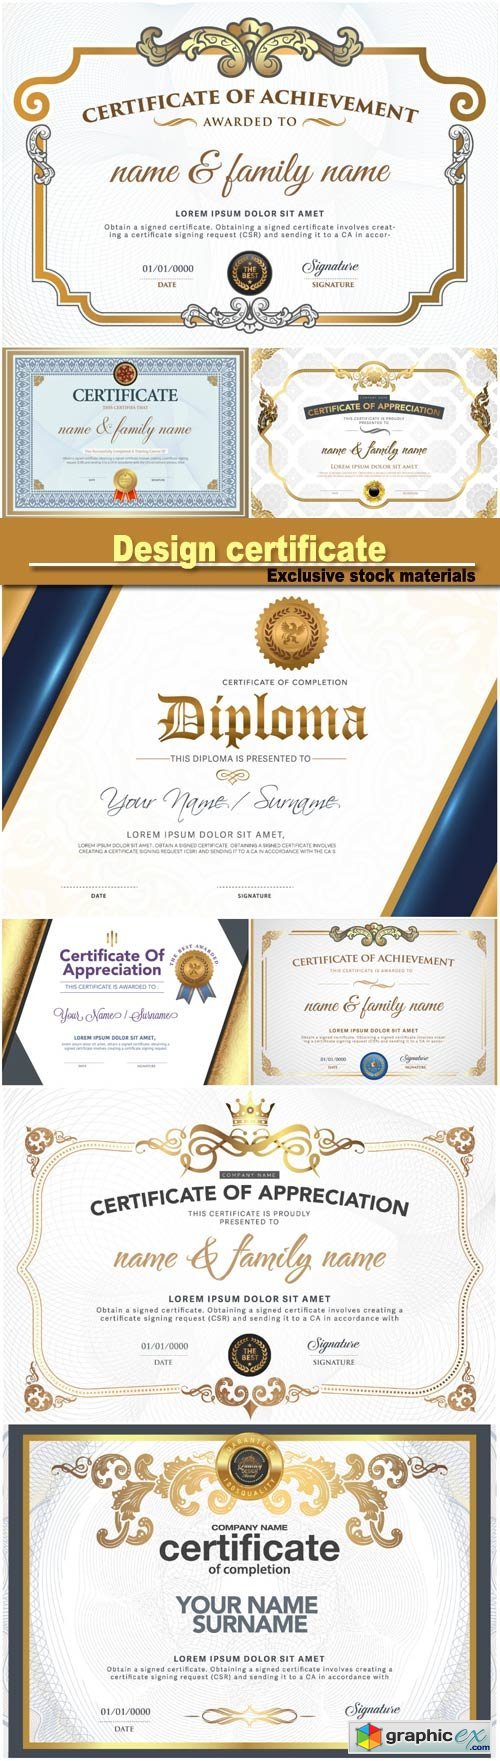 Design certificate, vector illustration